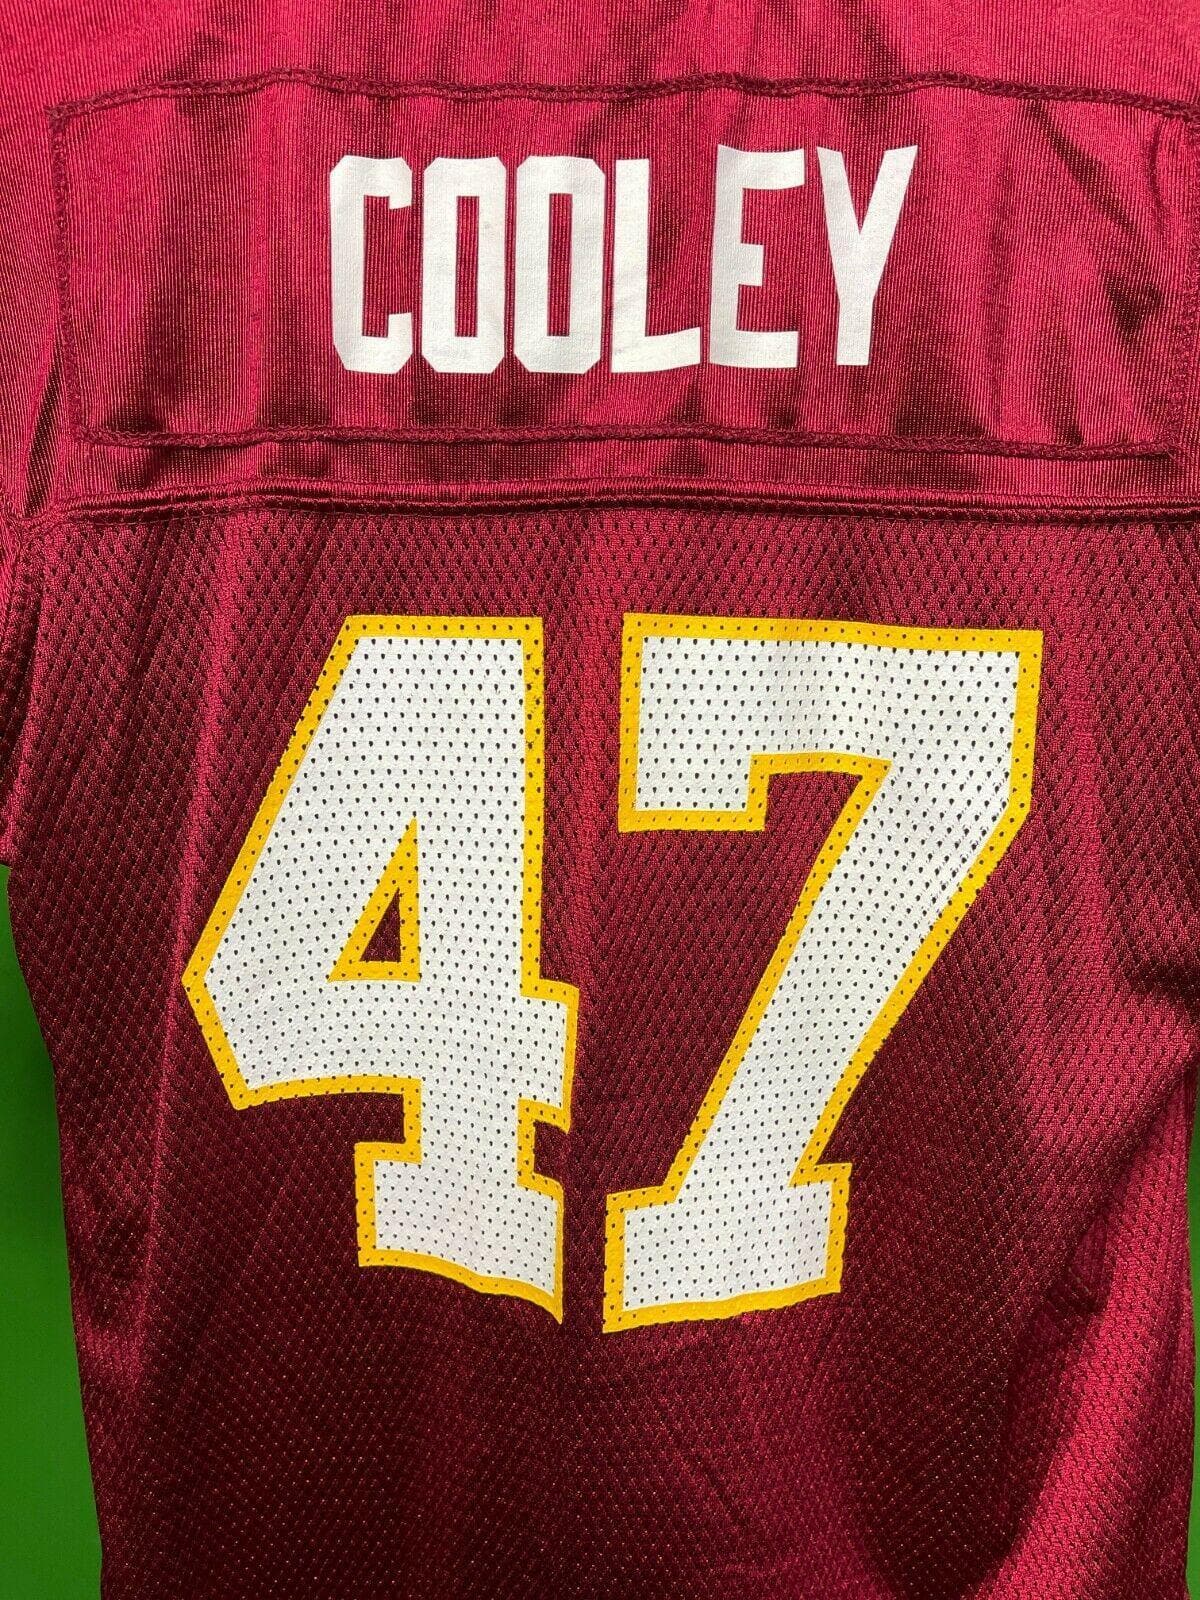 NFL Washington Commanders (Redskins) Cooley #47 Reebok Jersey Youth Large 14-16